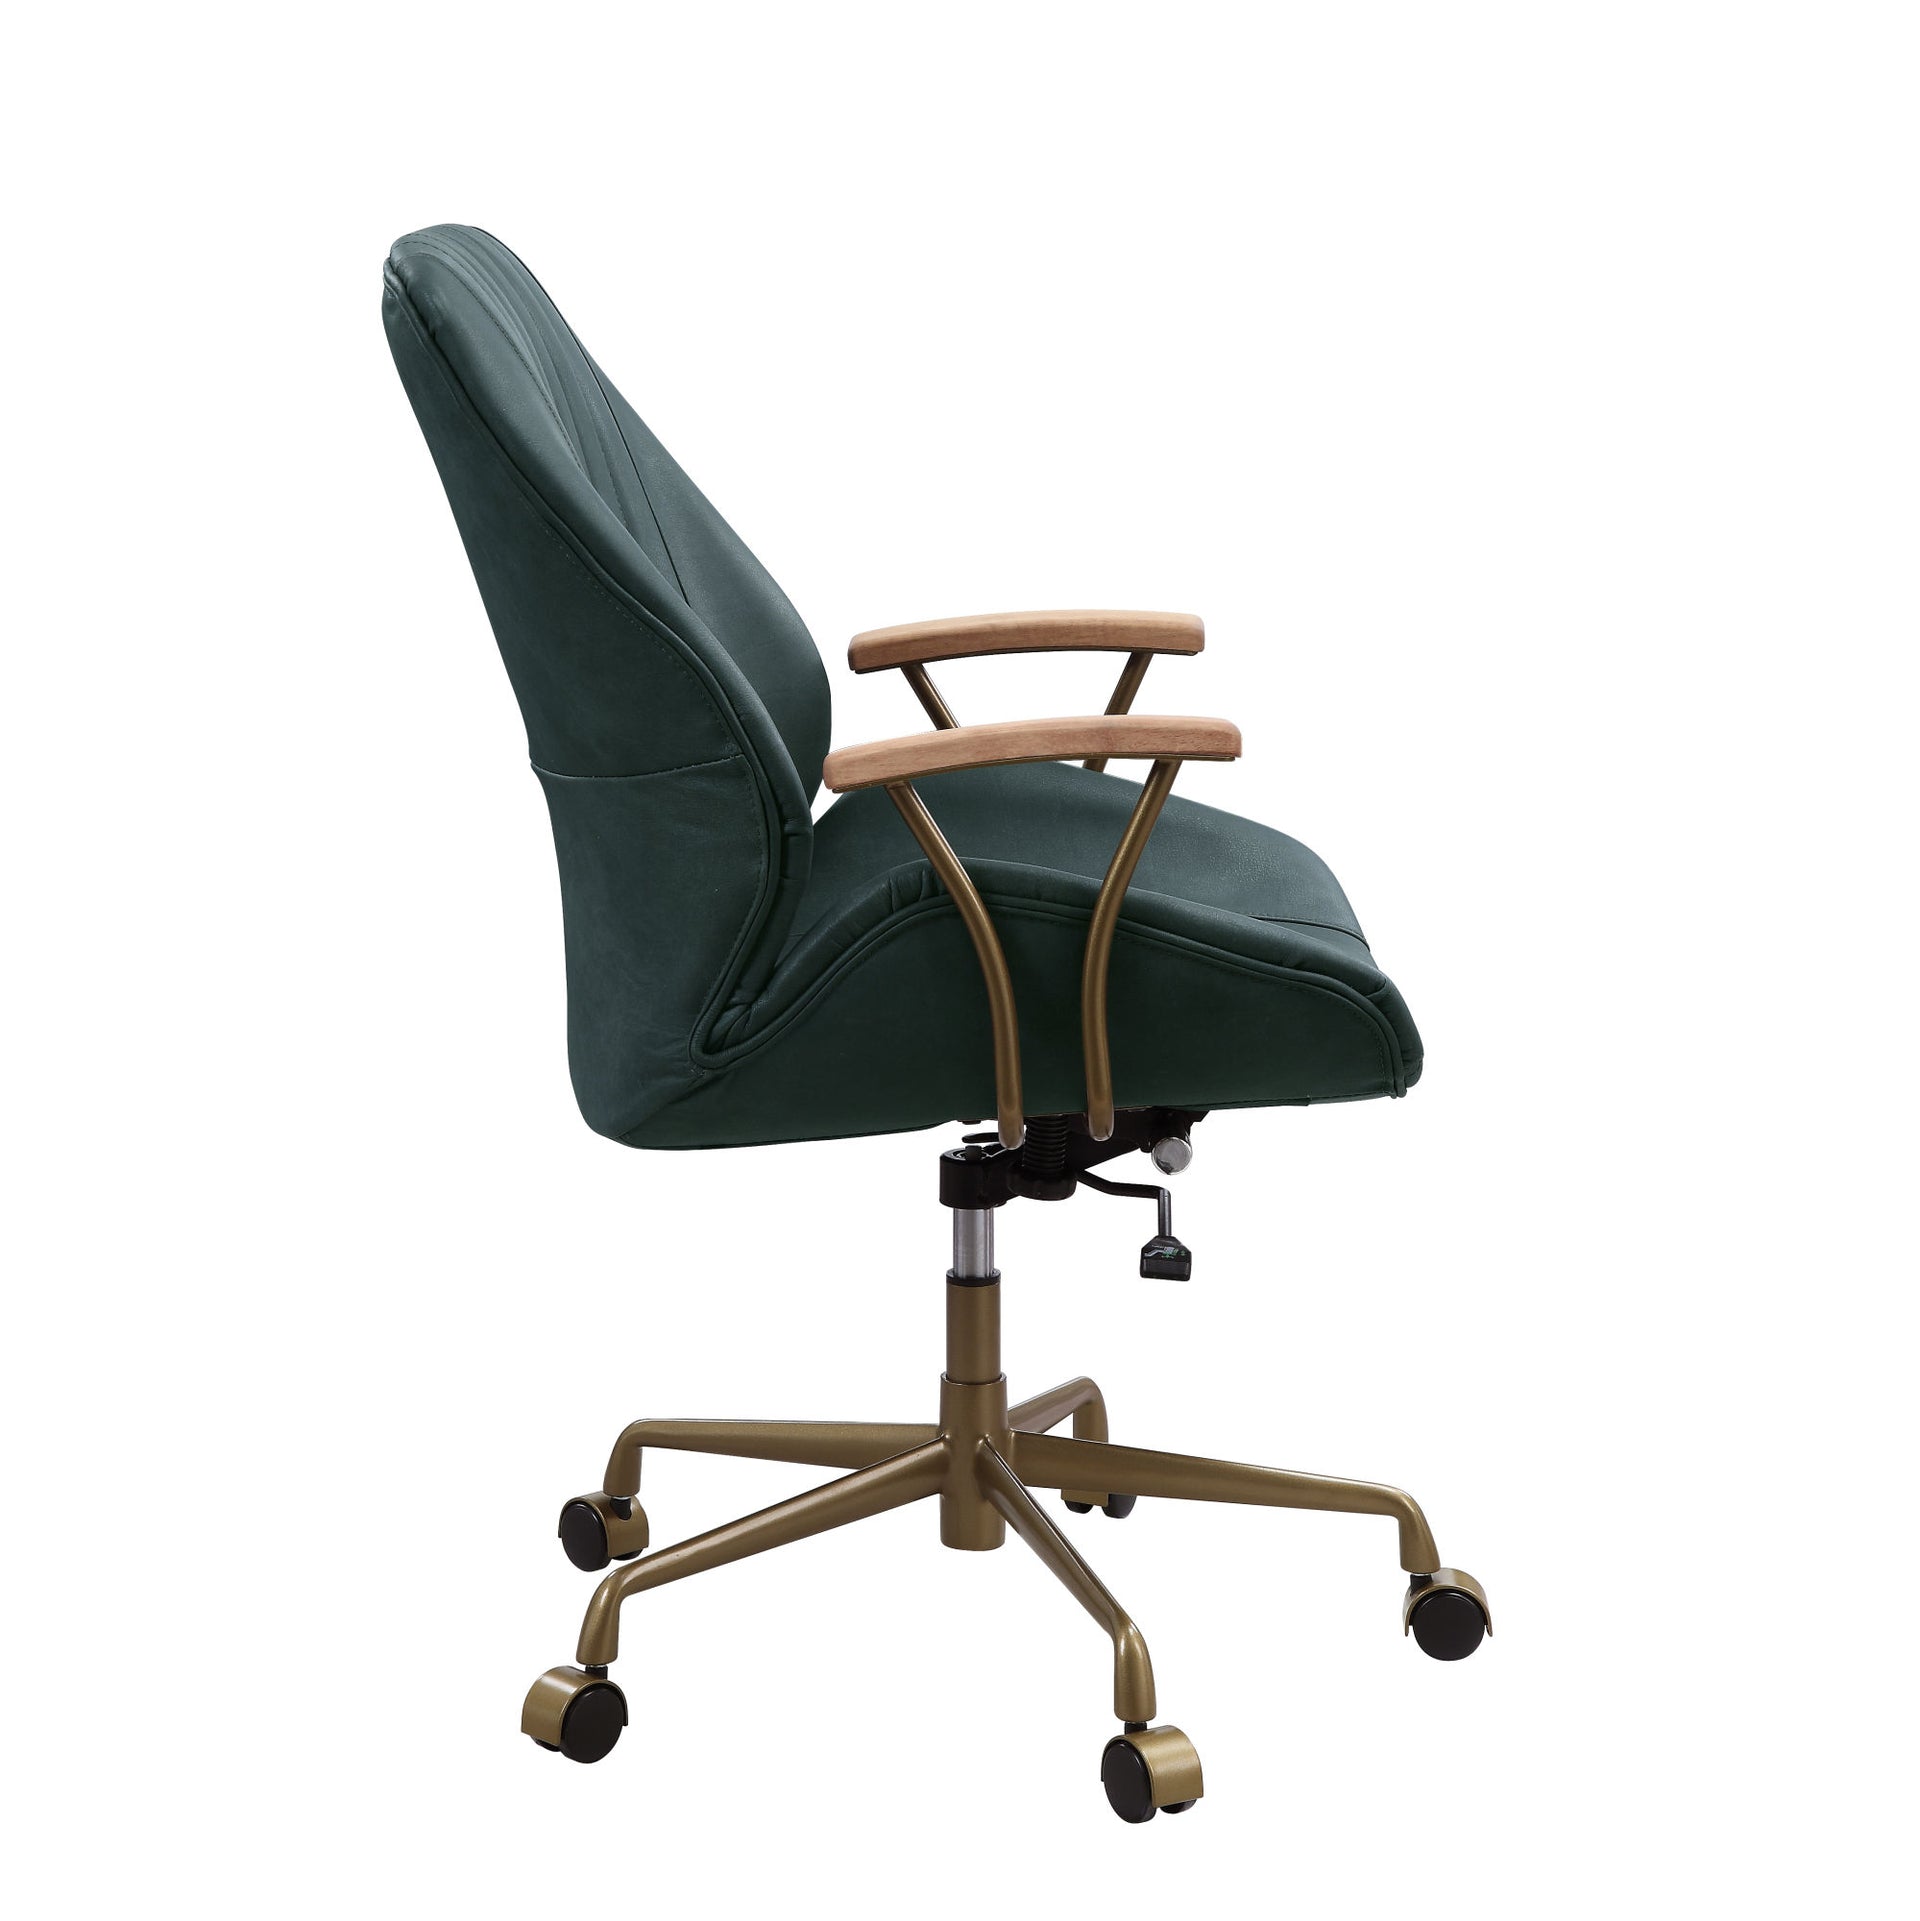 Hamilton Office Chair in Dark Green Finish 93240